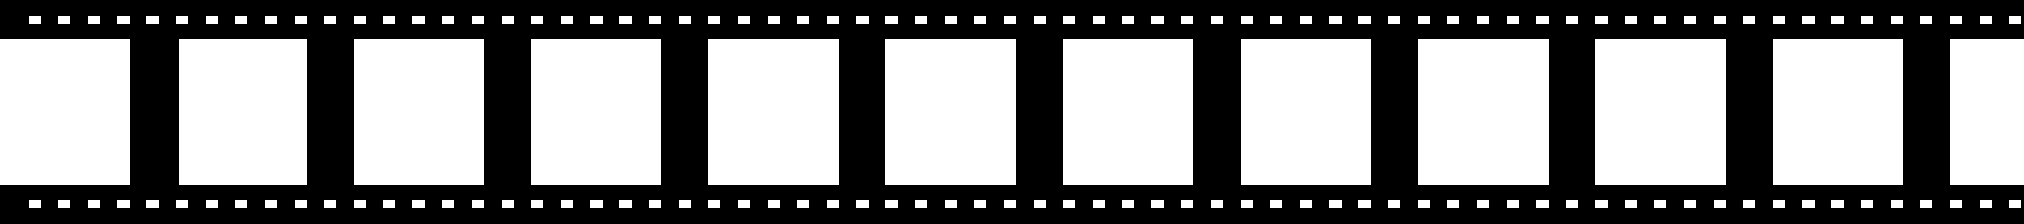 Film strip vector clipart